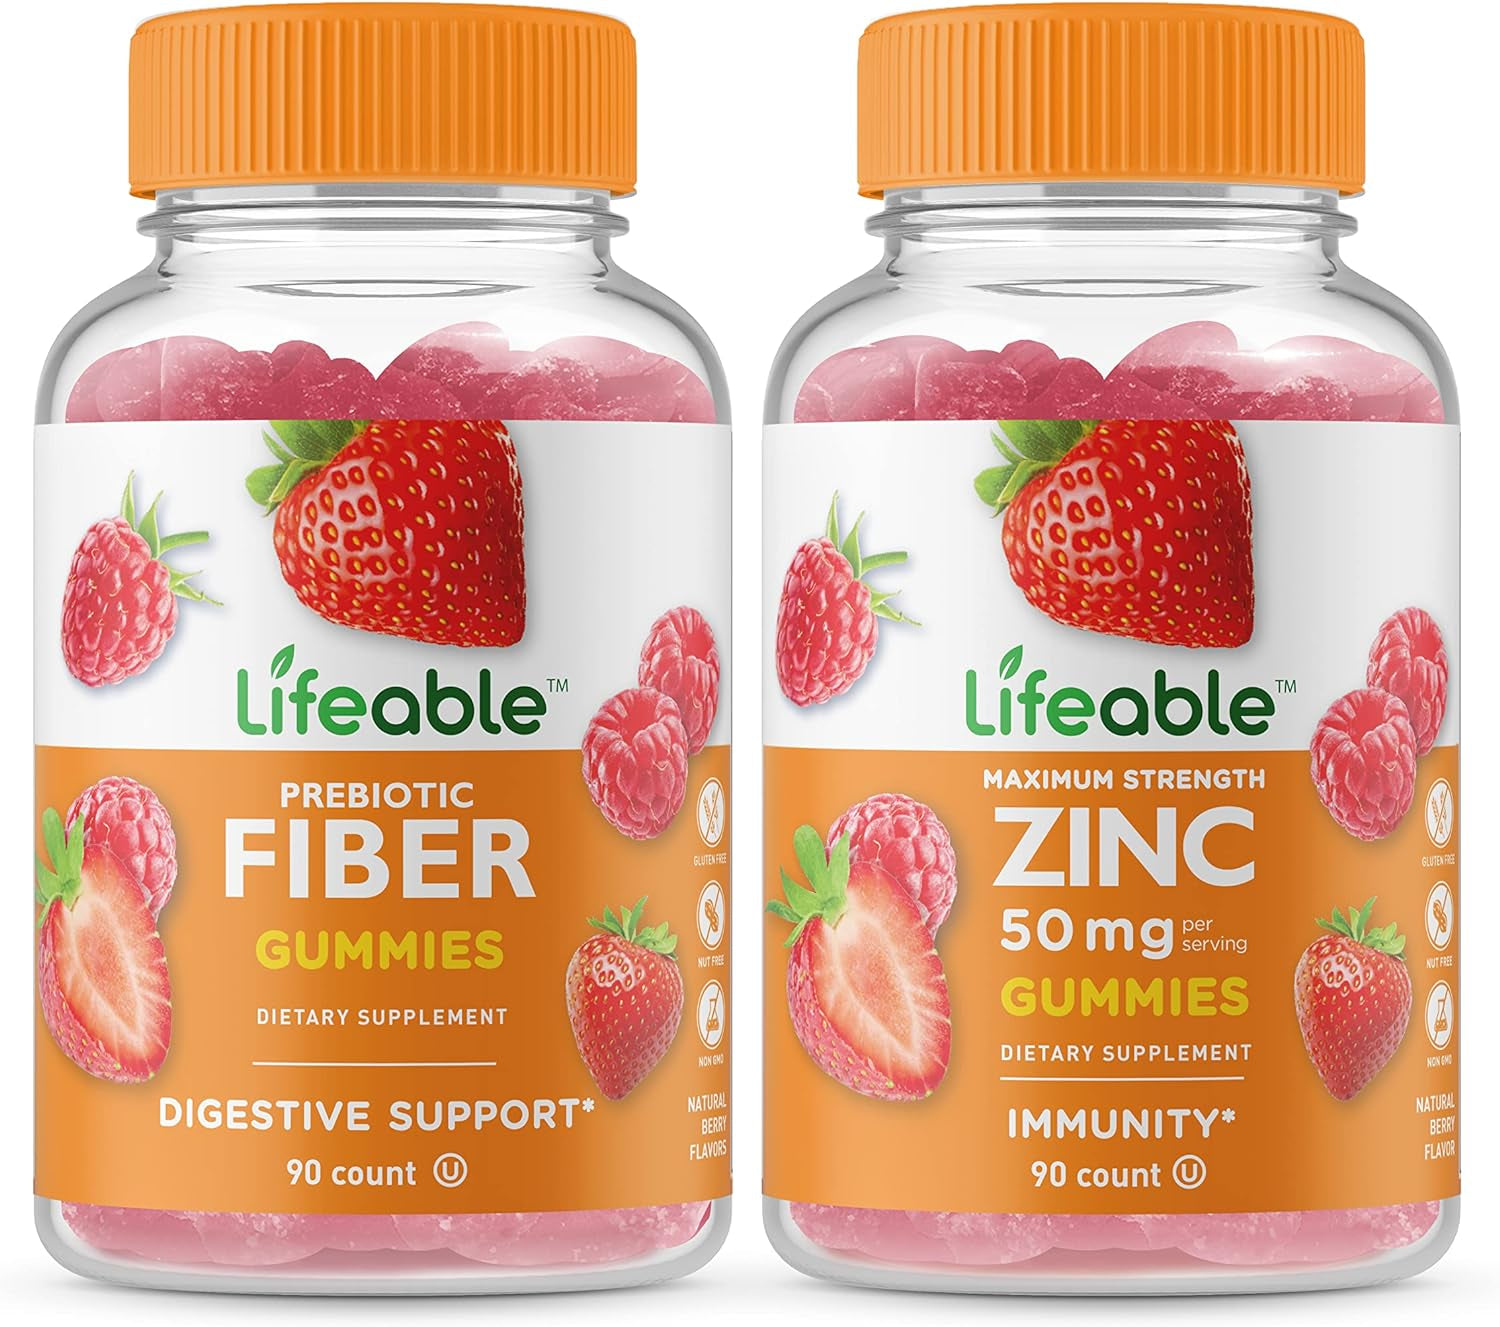 Lifeable Prebiotic Fiber 5G + Zinc 50Mg, Gummies Bundle - Great Tasting, Vitamin Supplement, Gluten Free, GMO Free, Chewable Gummy